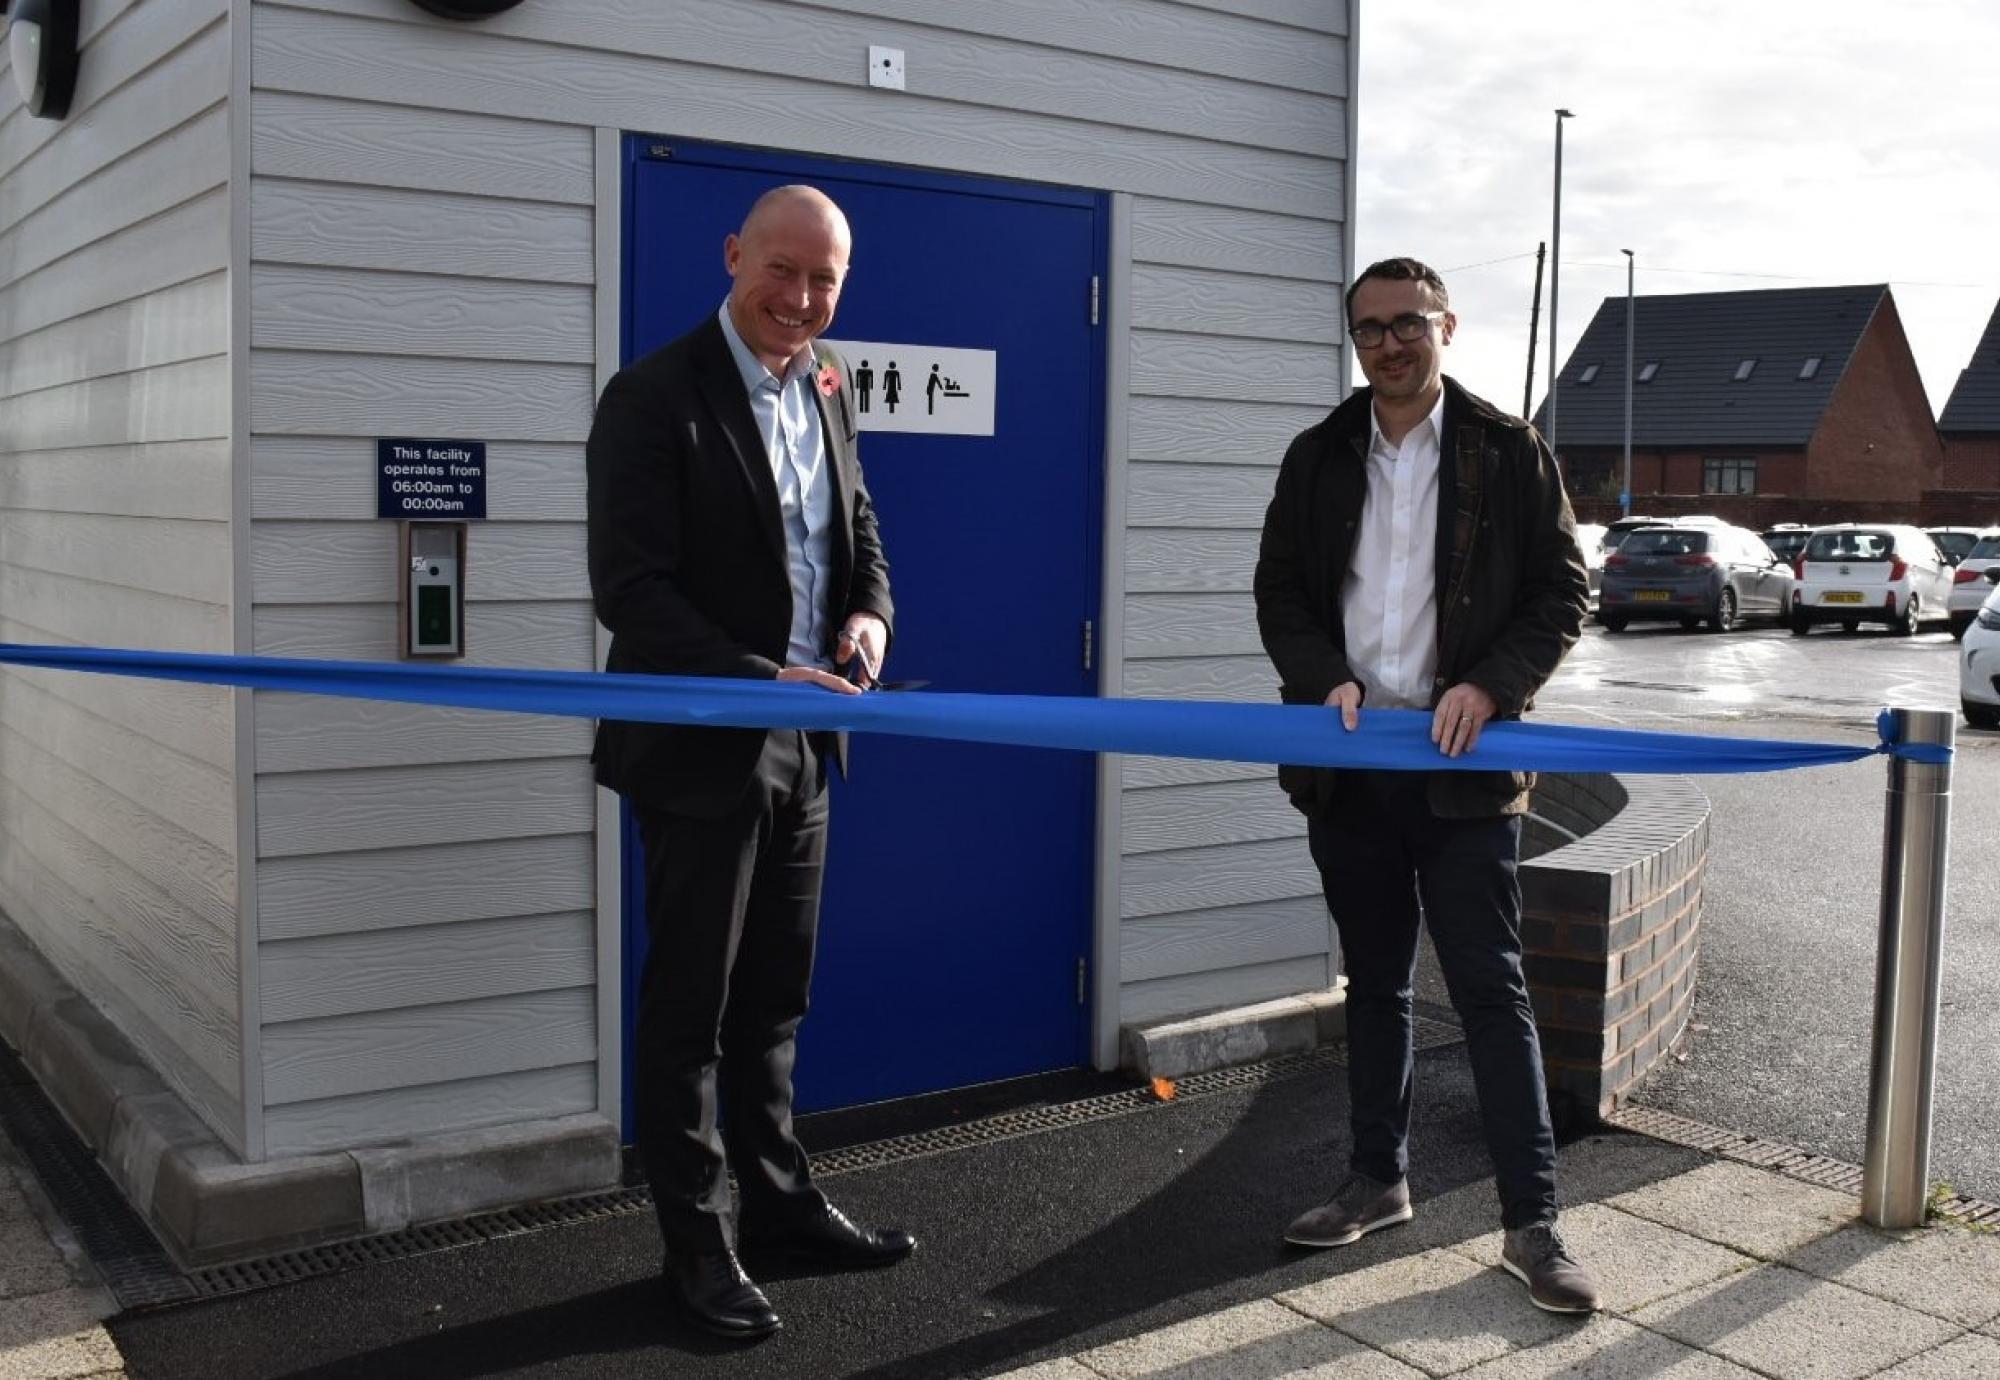 Chris Jackson and Simon Elliott open the new toilet pod by cutting a ribbon, via Northern